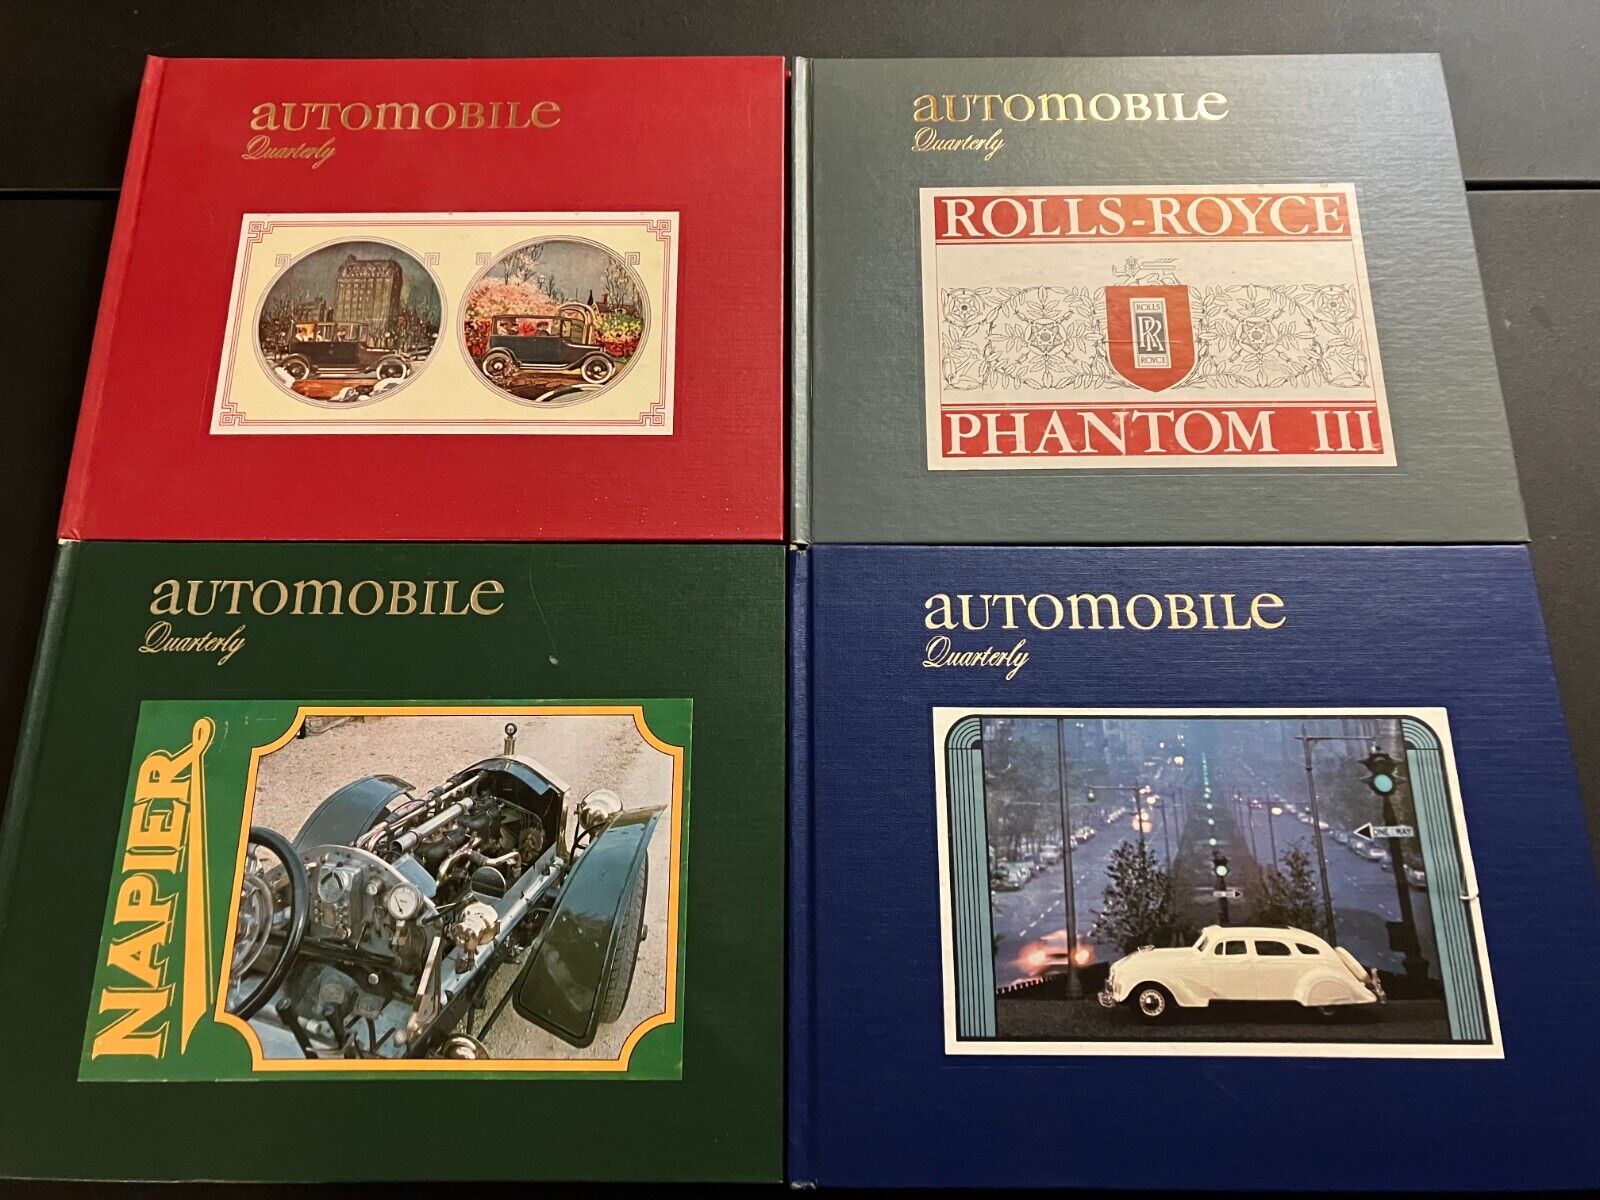 Vintage 1979 Automobile Quarterly Volume 17 Complete Set 1-4 Hardcover Books